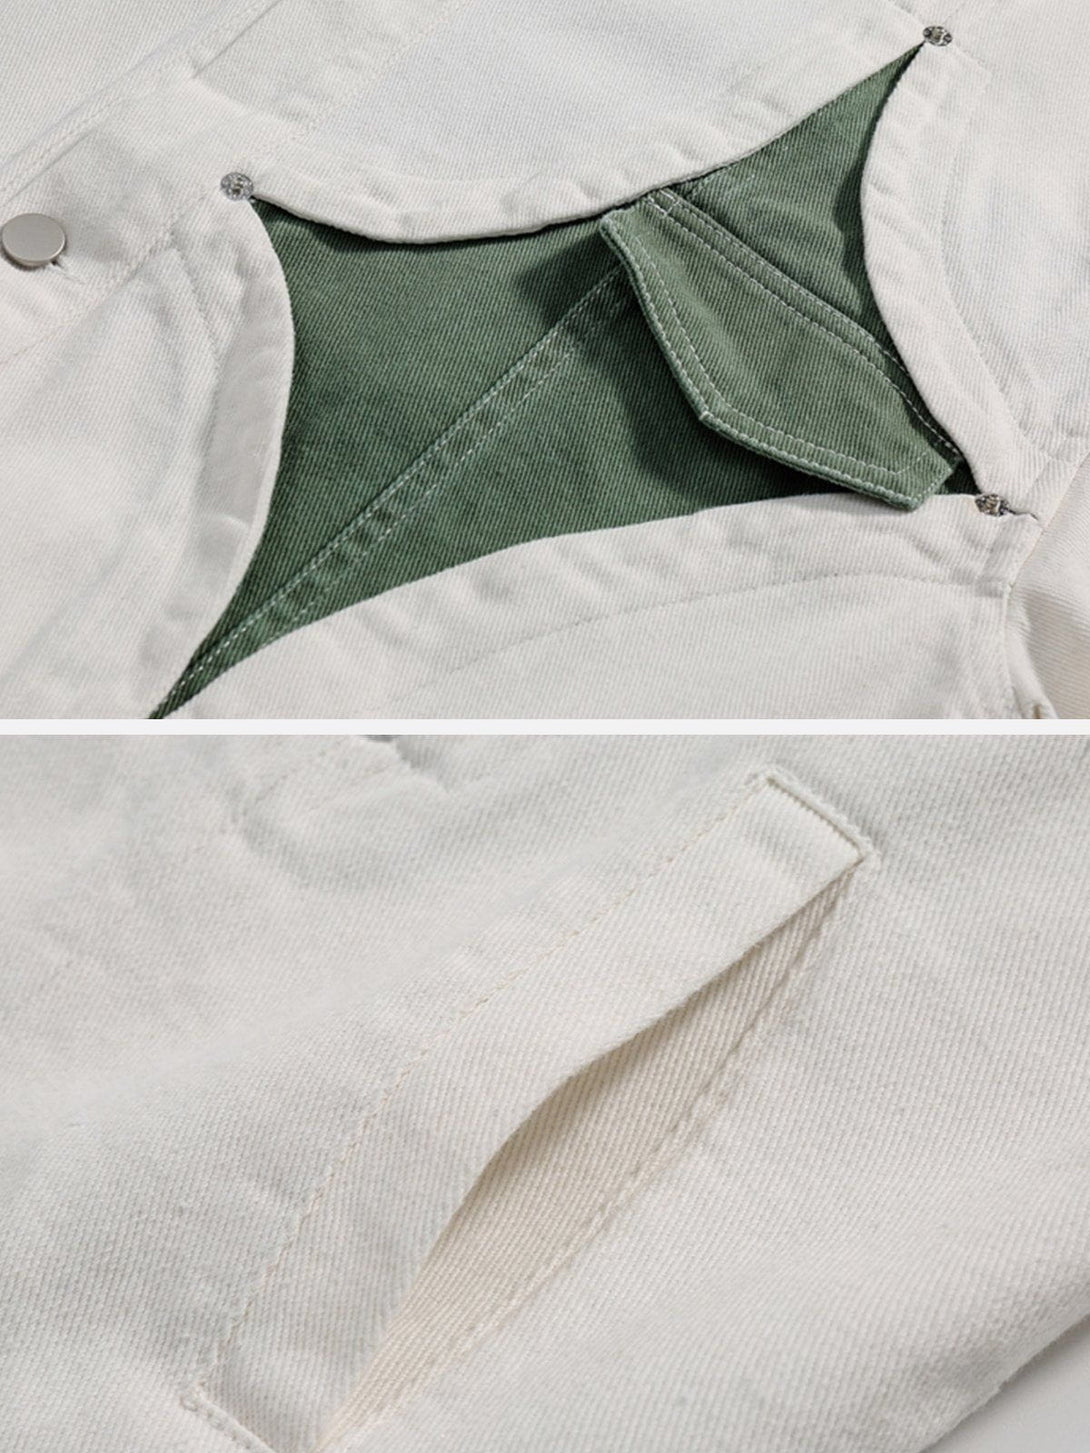 Majesda® - Splicing Contrast Denim Jacket outfit ideas, streetwear fashion - majesda.com